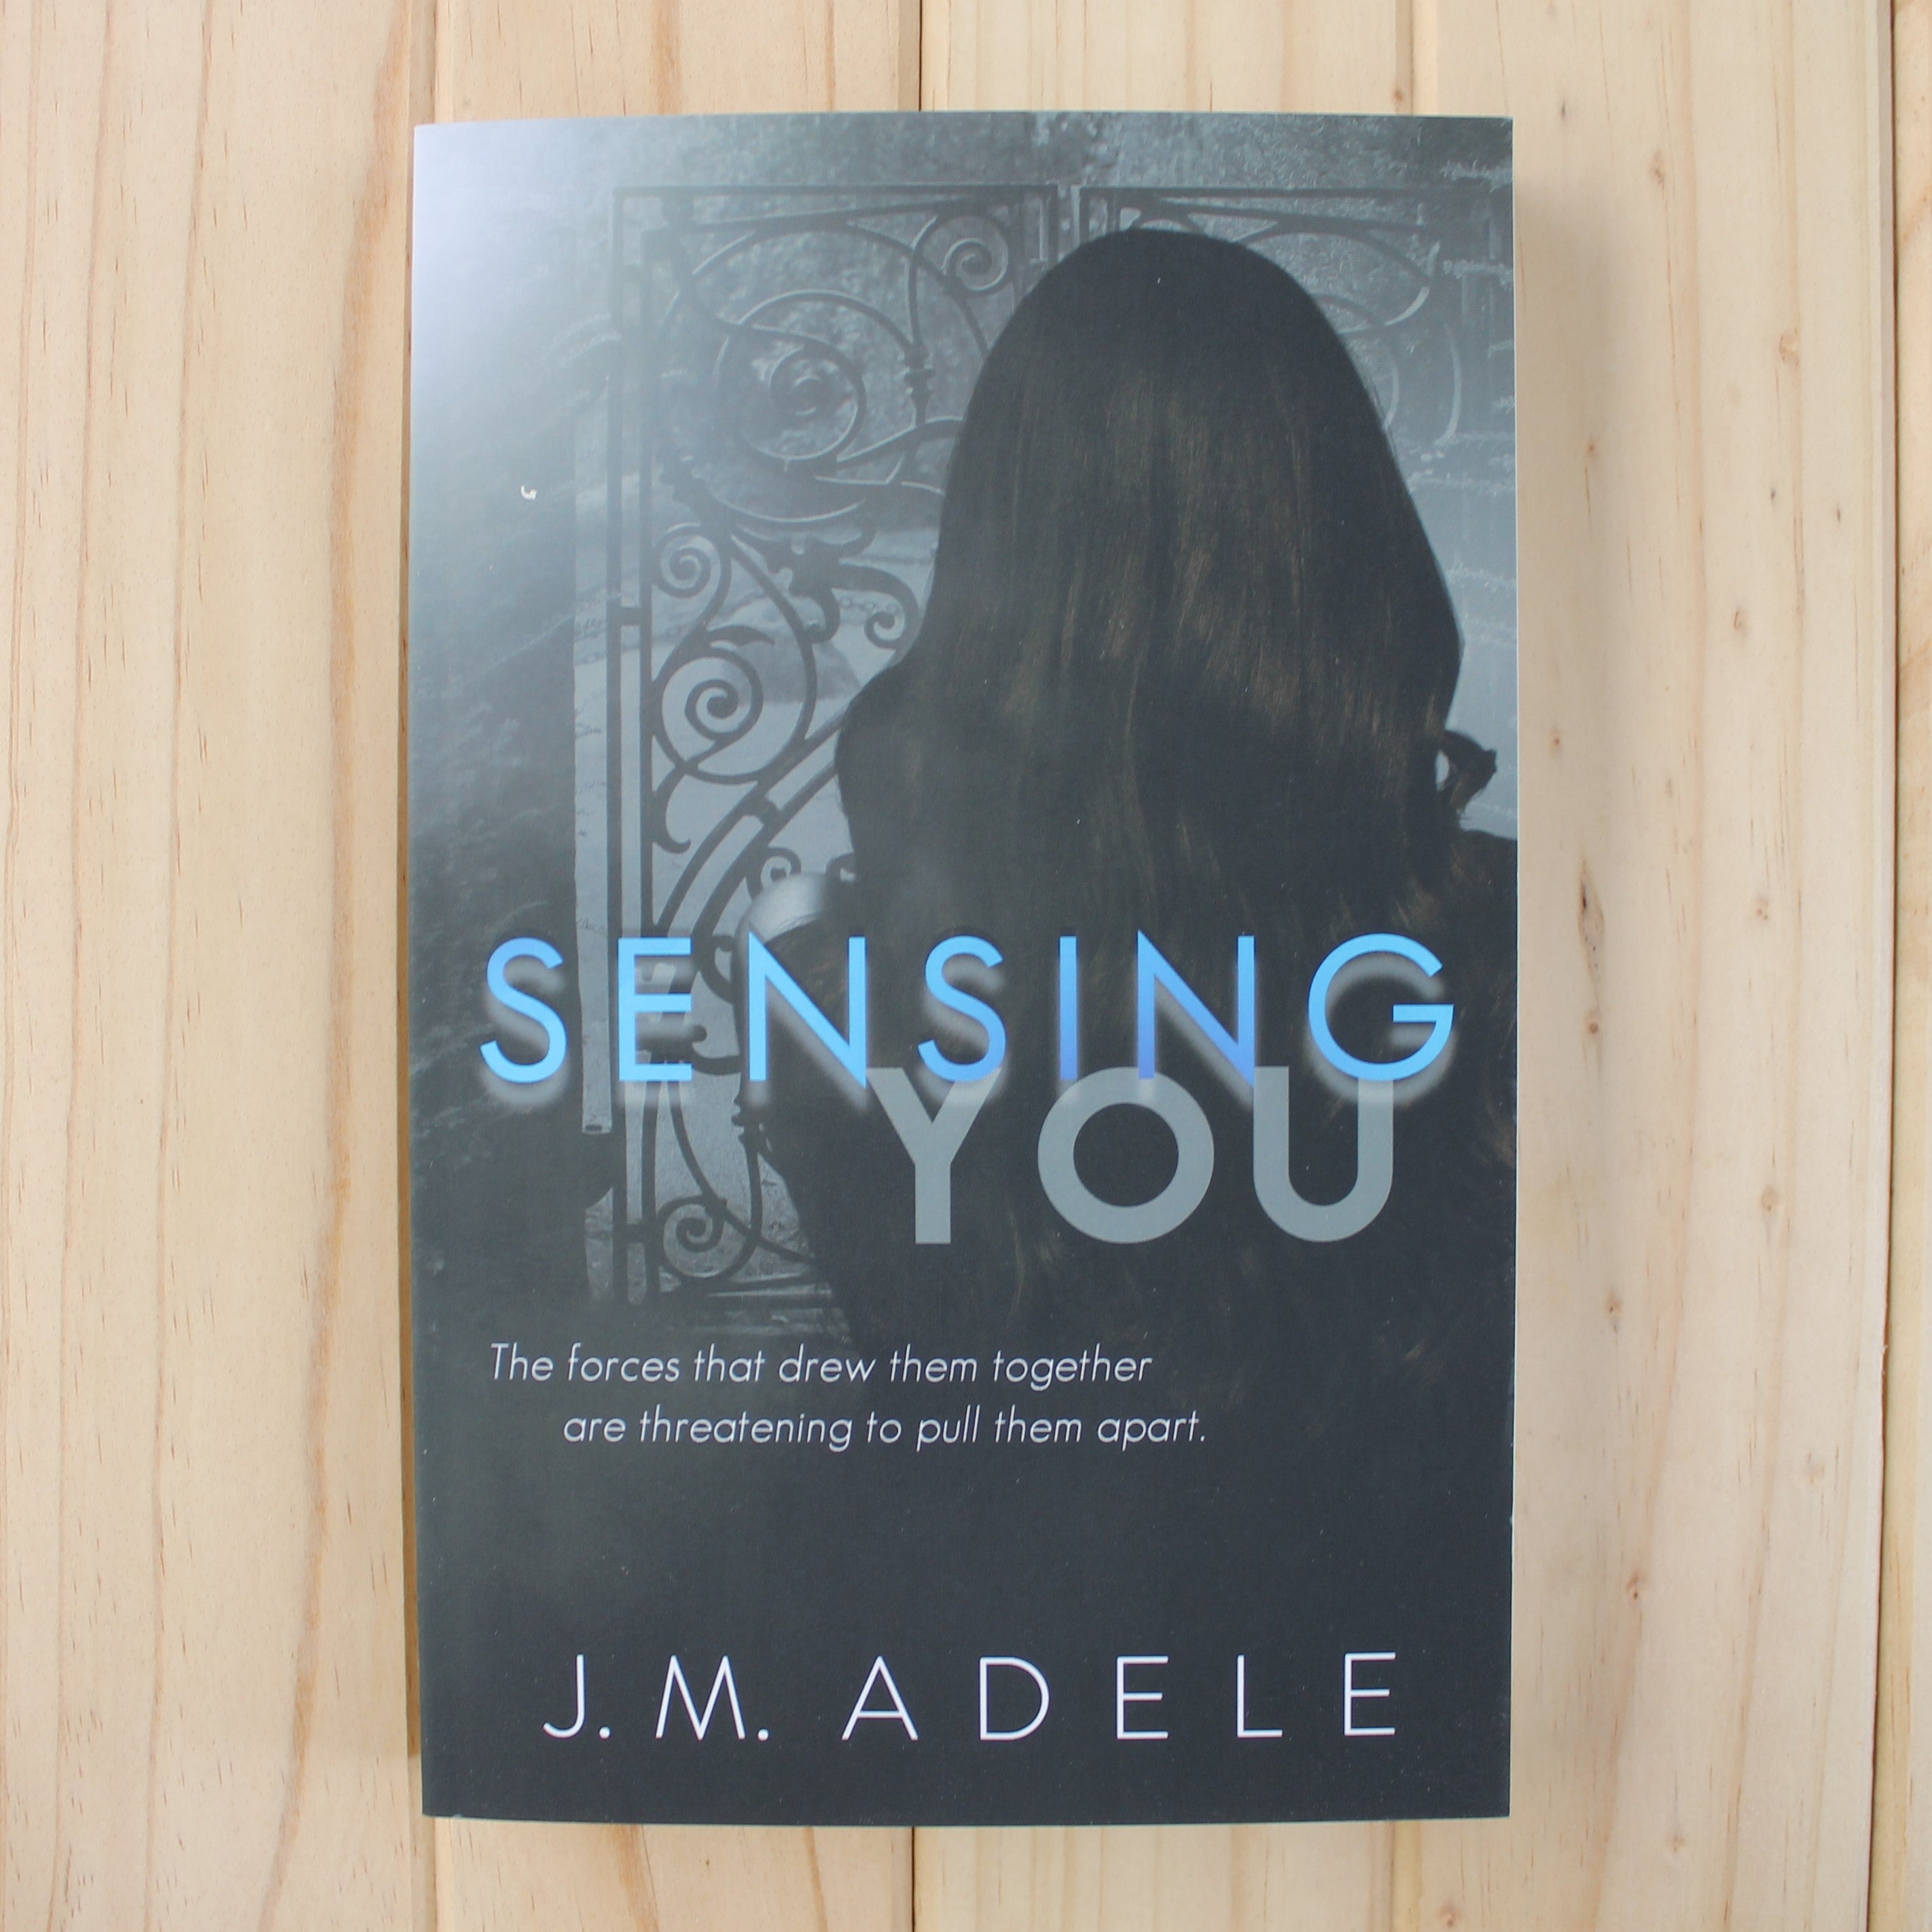 Sensing you by J.M. Adele